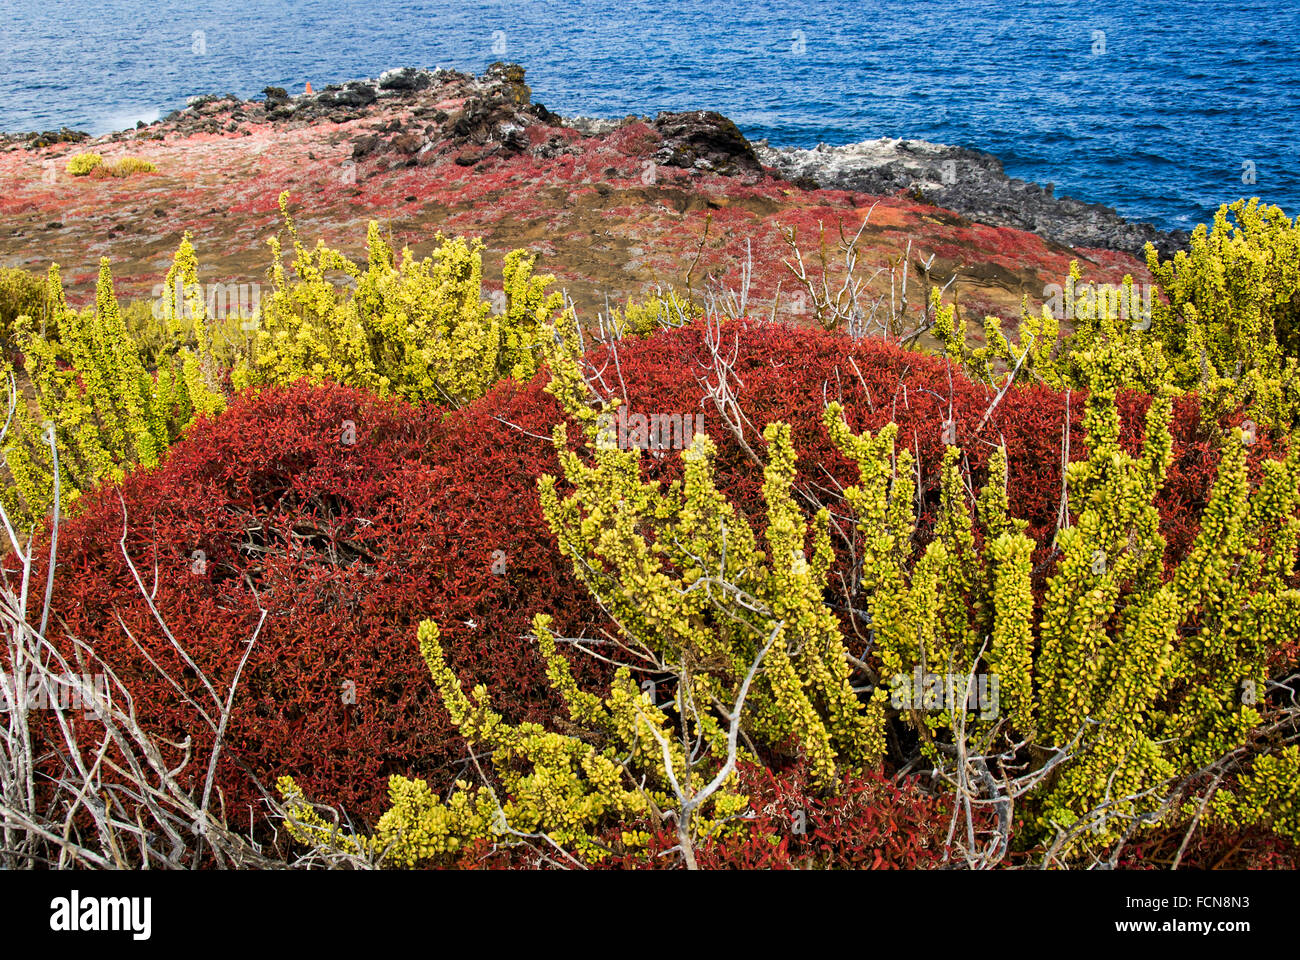 Wunderbare Landschaft Punta Pitt Cristol Insel San Galapagos Inseln Ecuador Stockfoto